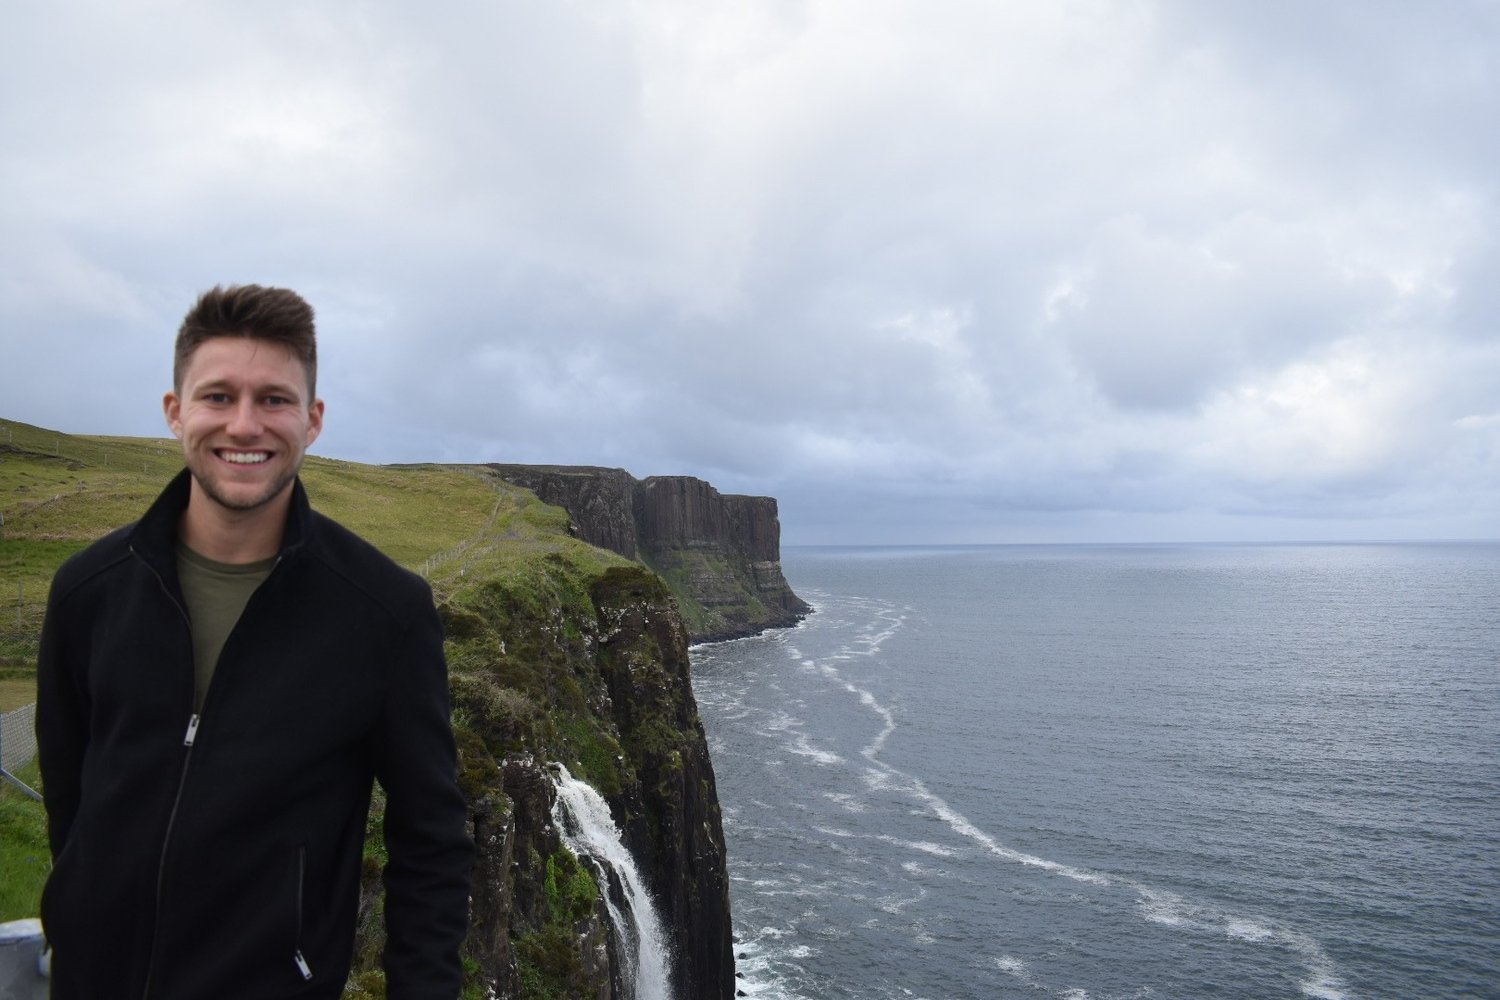 Adam on a cliff overlooking the ocean